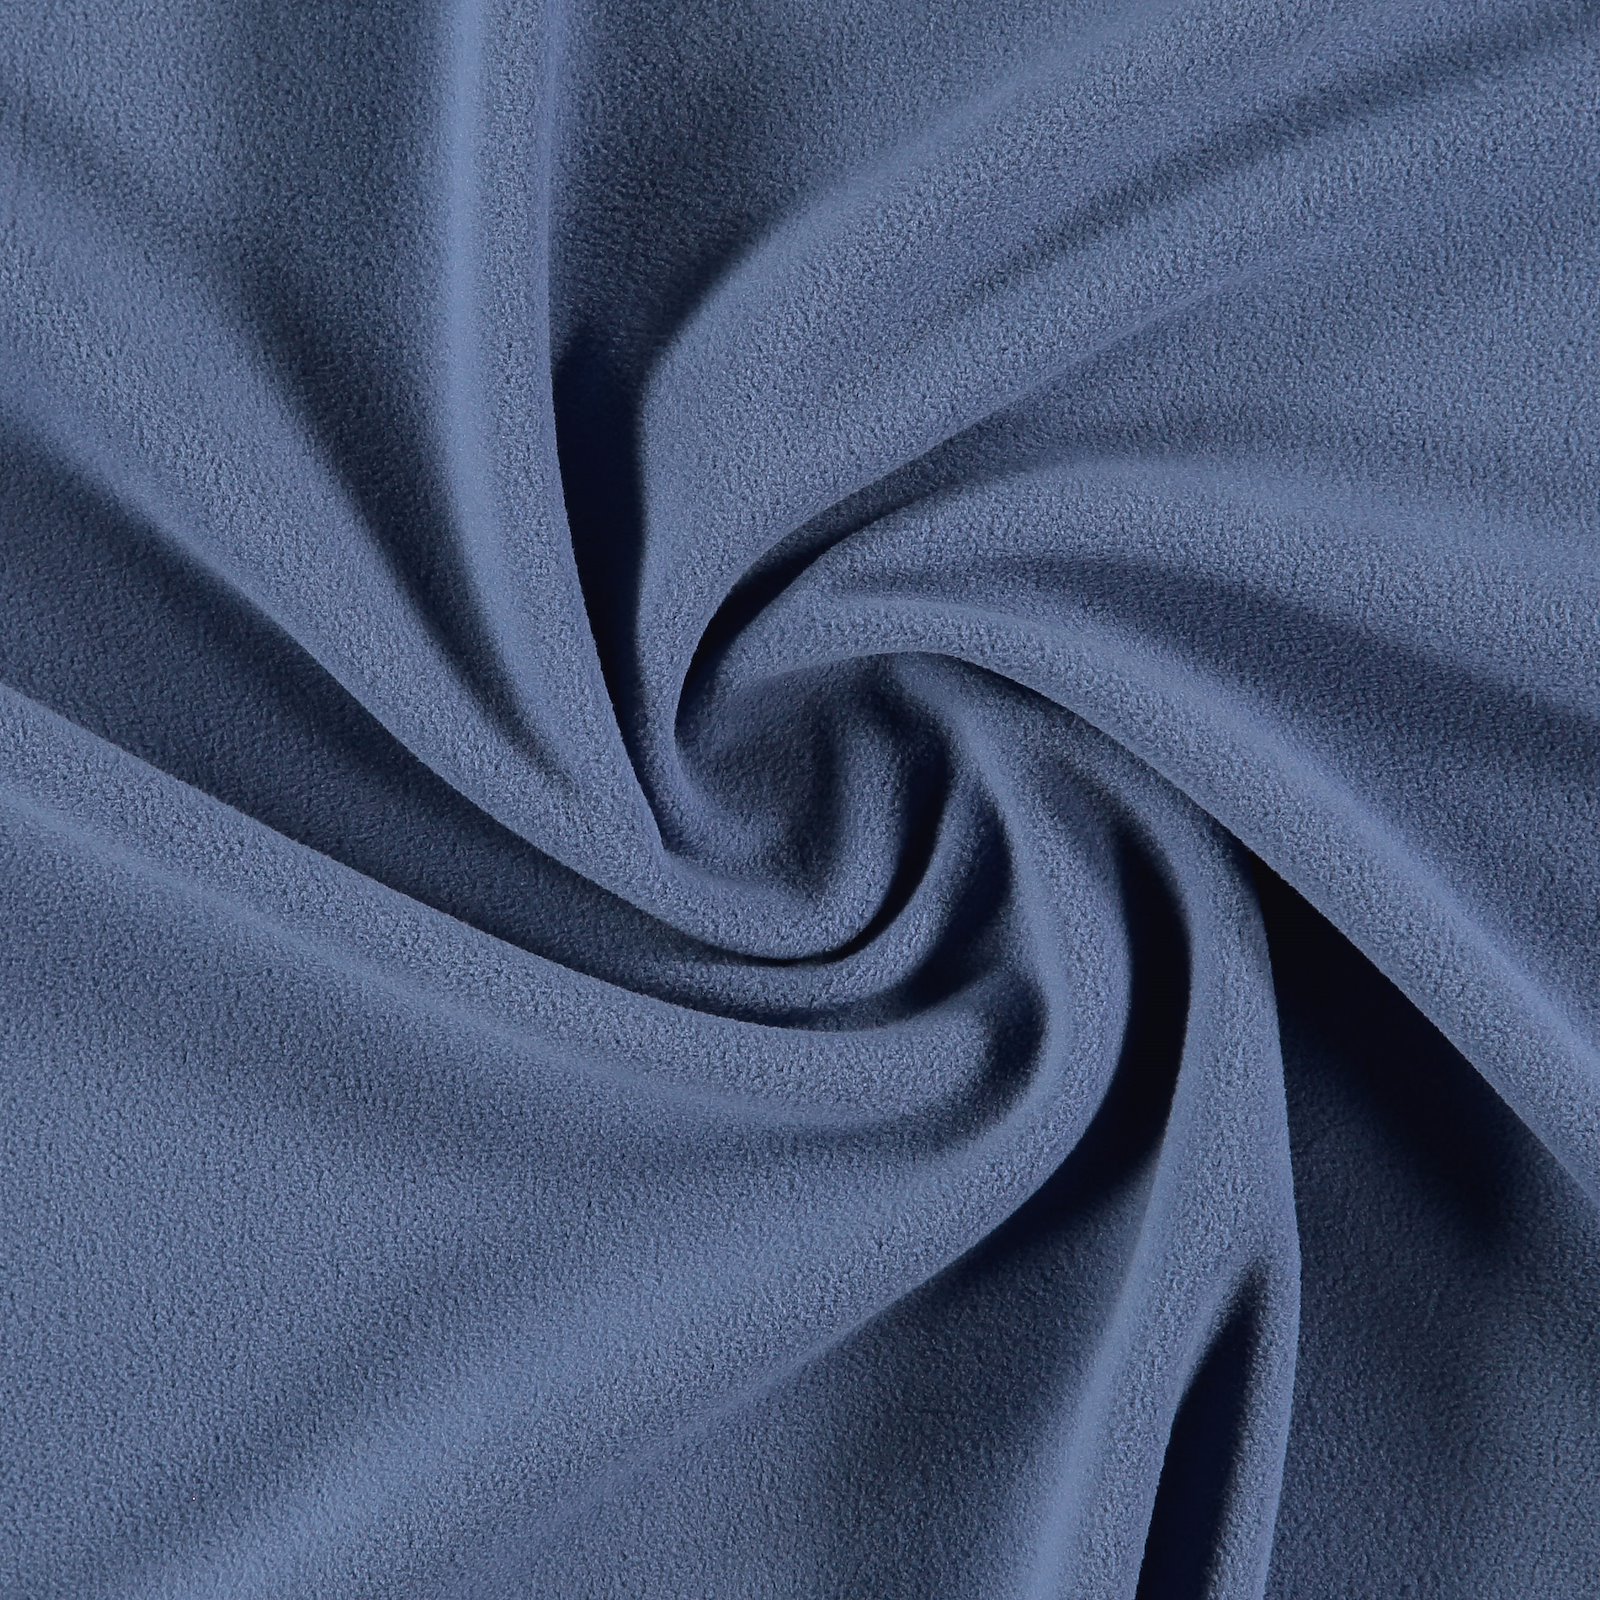 https://media.selfmade.com/images/micro-fleece-medium-blue-220653-pack.jpg?width=1600&height=1600&i=56486&ud=acj3pf4y2gg